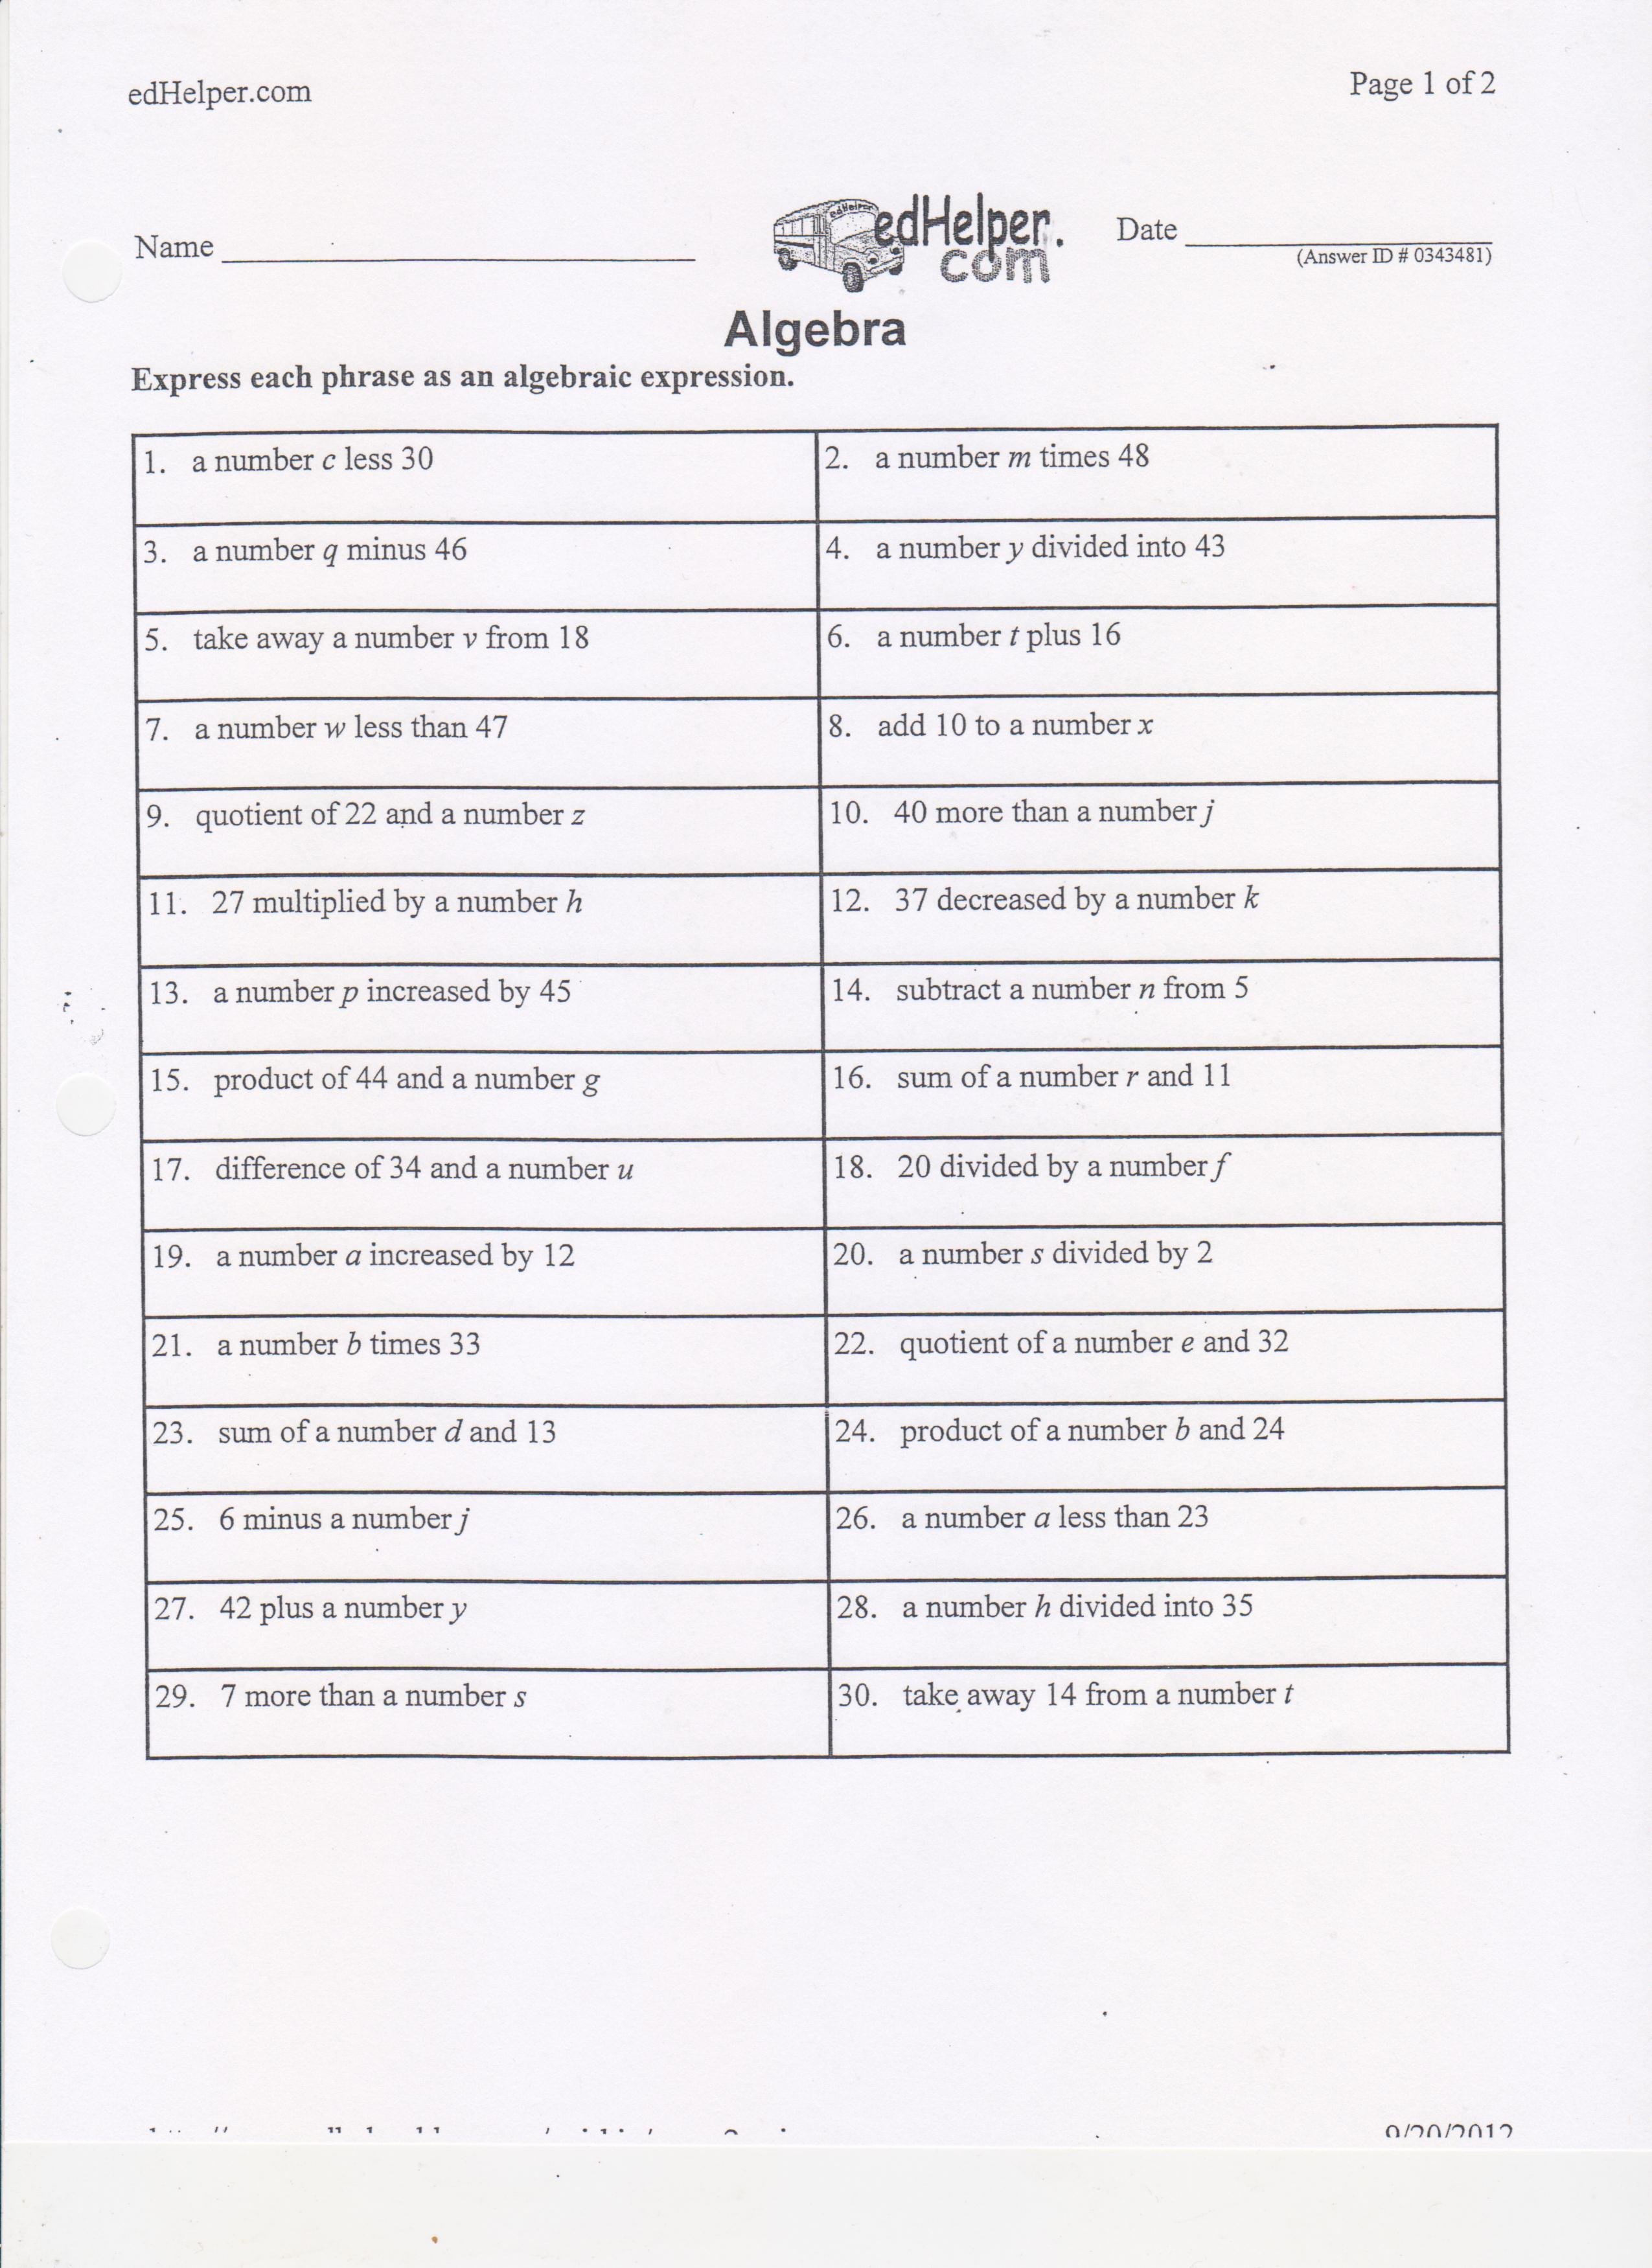 Translating Algebraic Expressions Worksheet Inspirational Translating Verbal Expressions Into Algebraic Expressions